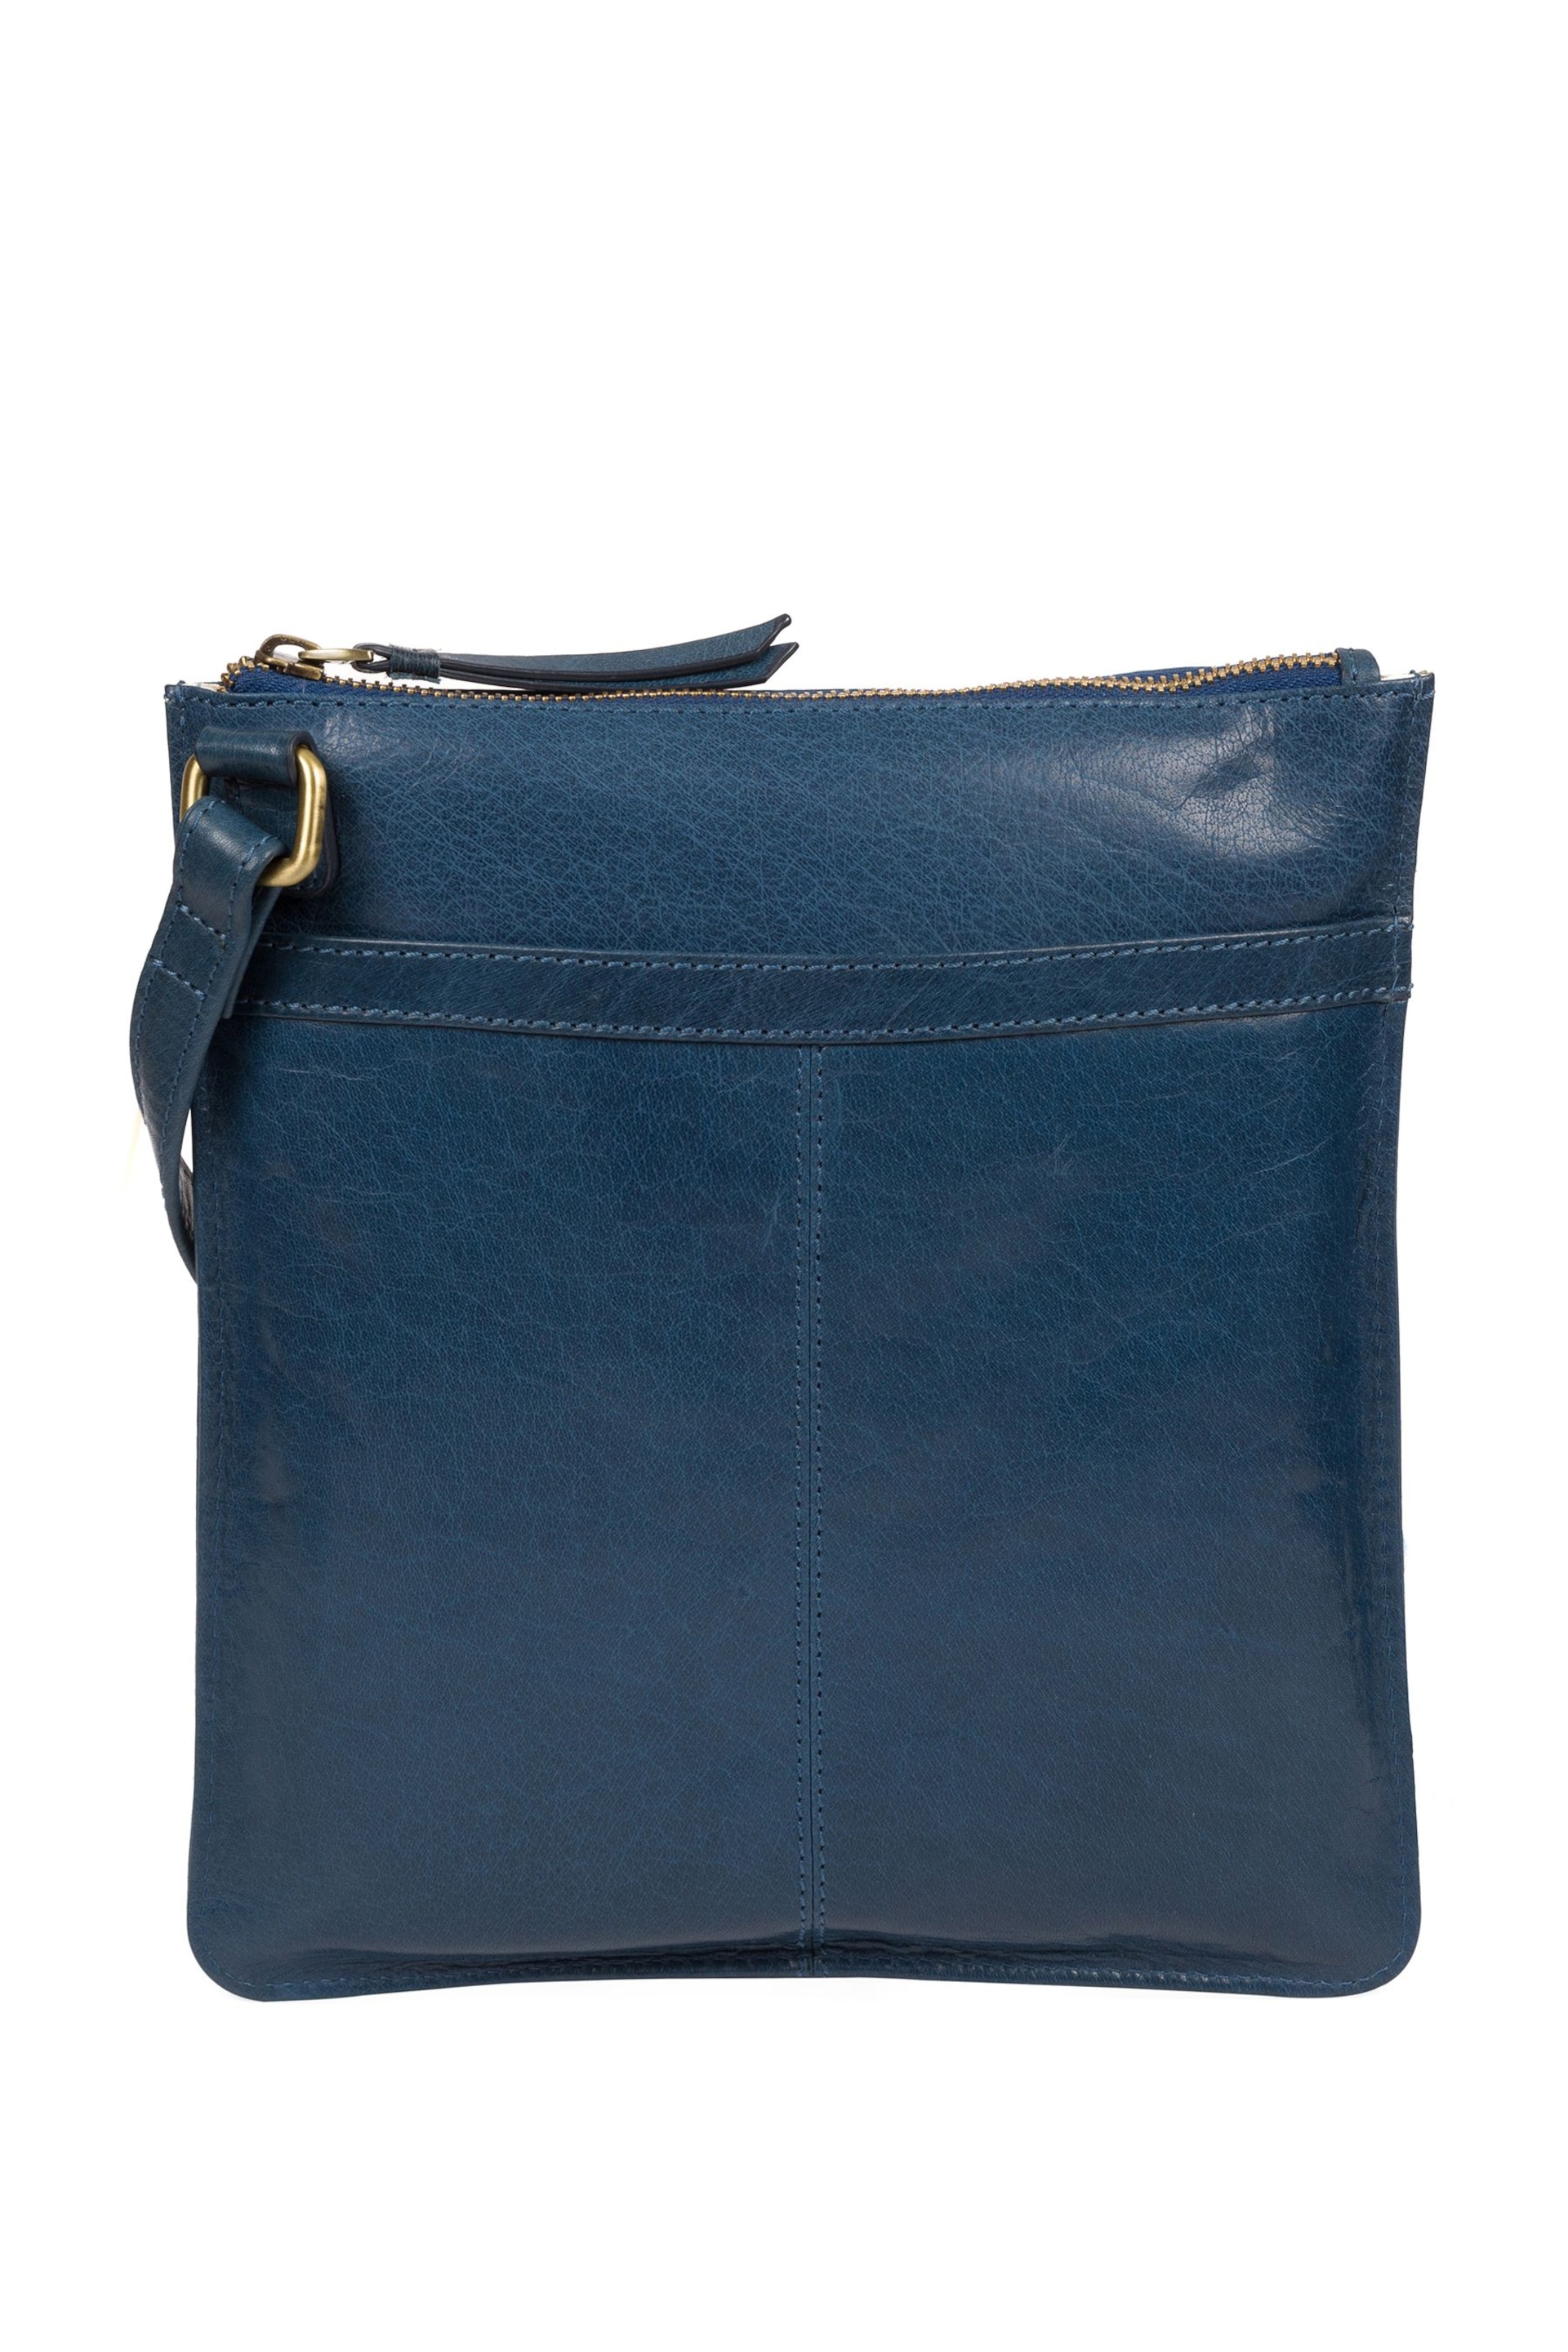 Conkca Lauryn Leather Cross-Body Bag - Image 2 of 5